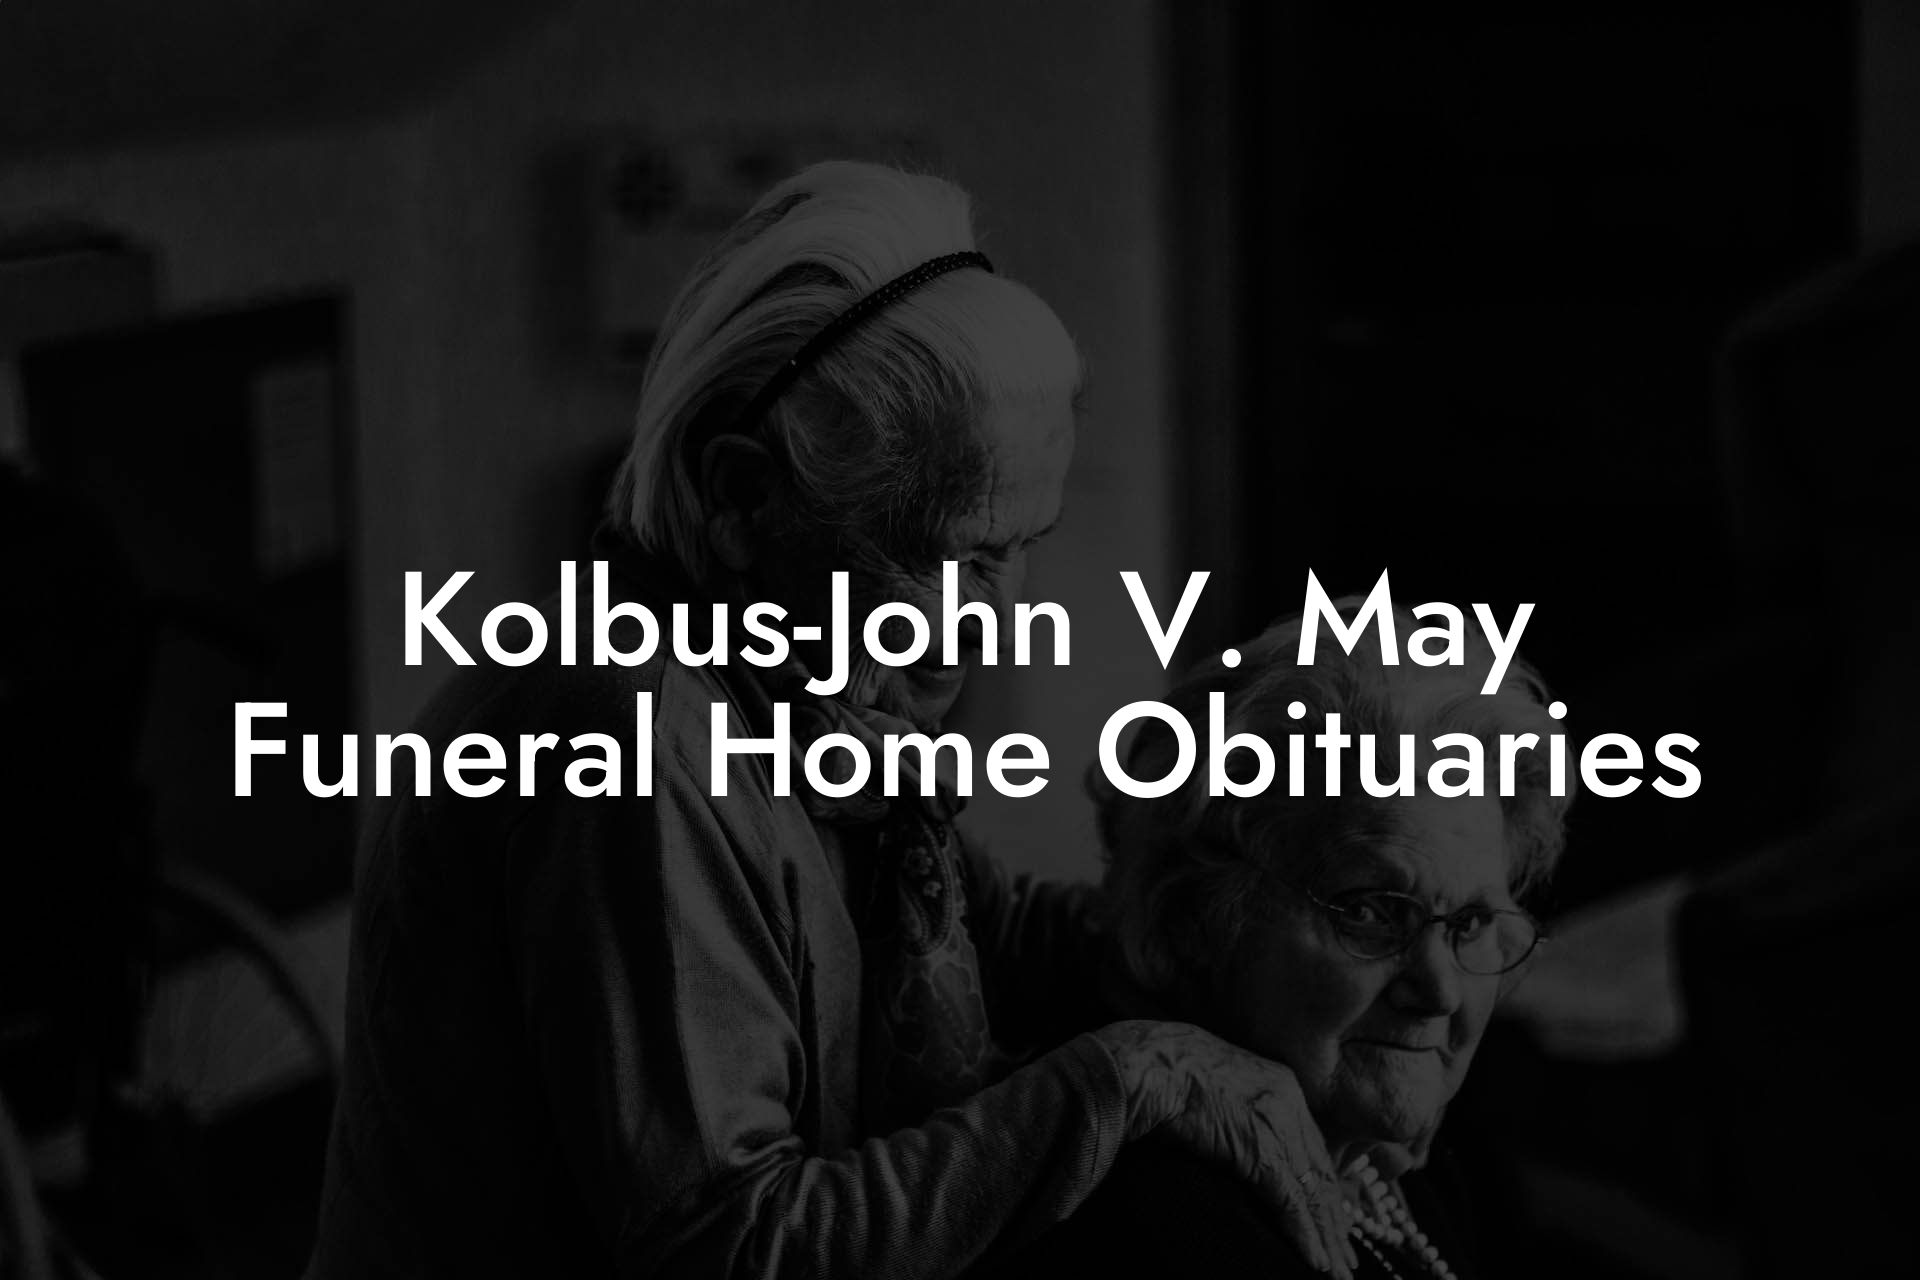 Kolbus-John V. May Funeral Home Obituaries